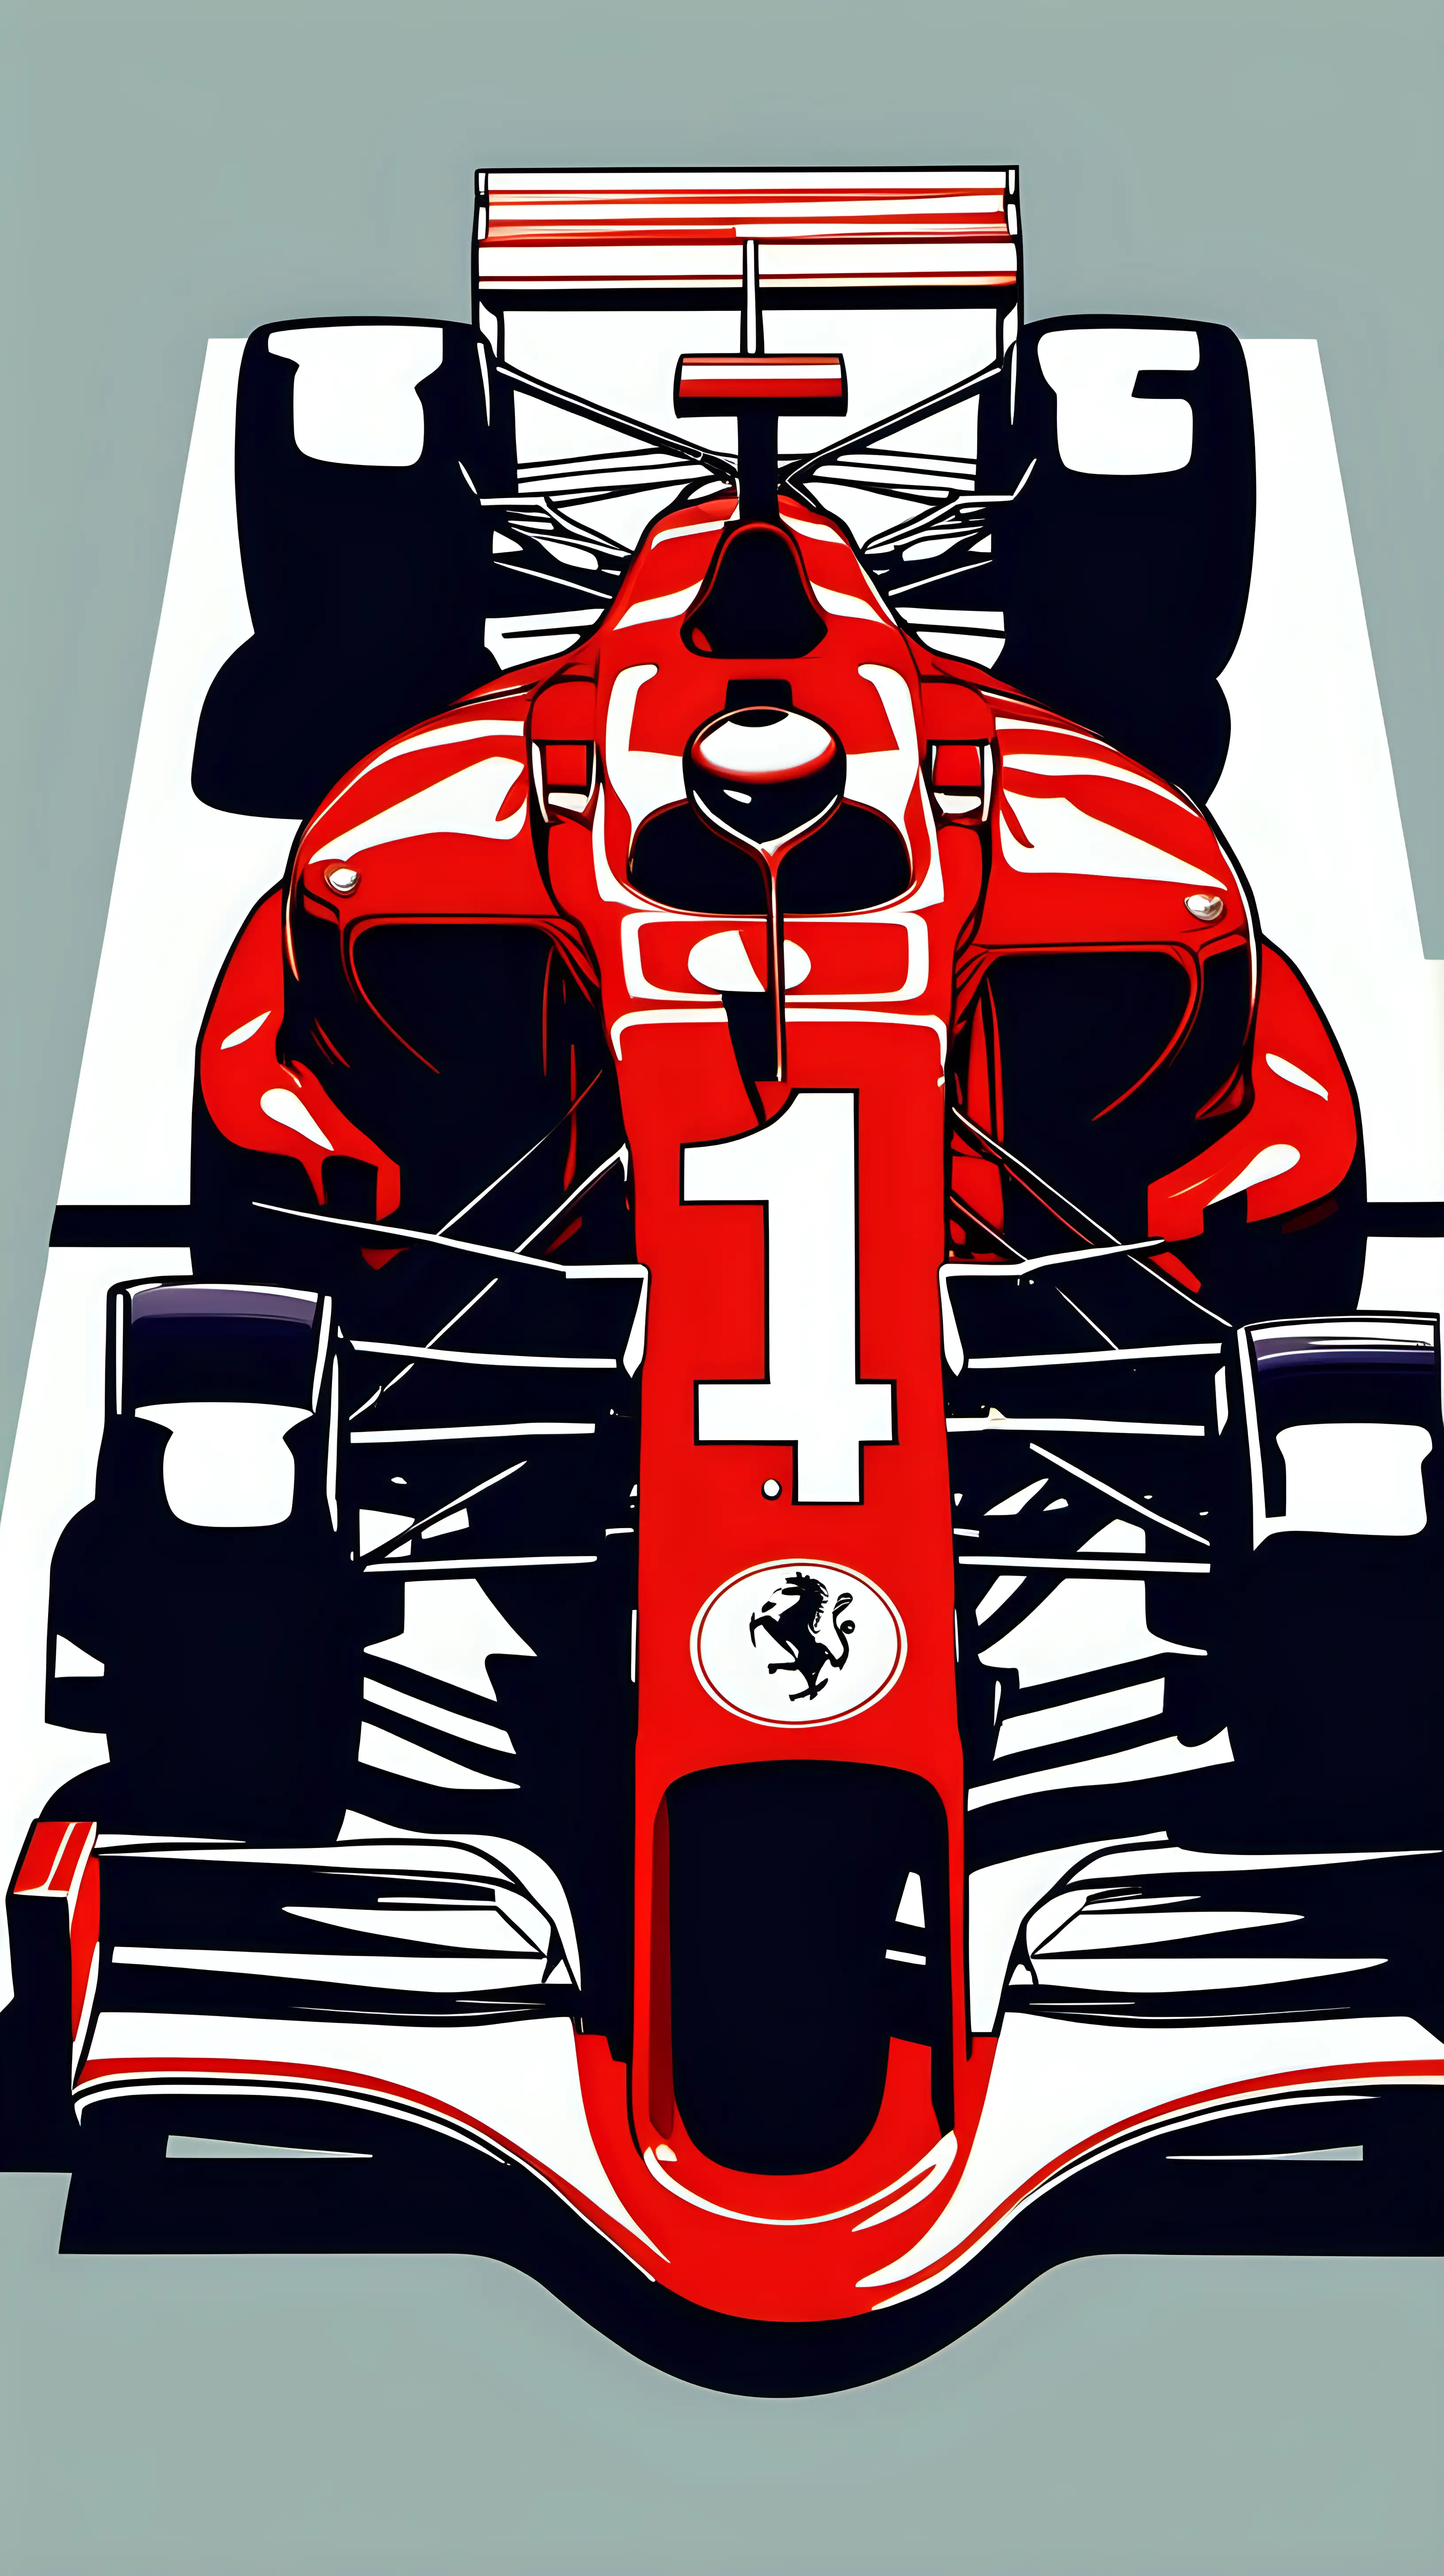 Ferrari Formula 1 Racing Car with Andy Warhol Pop Art Flair